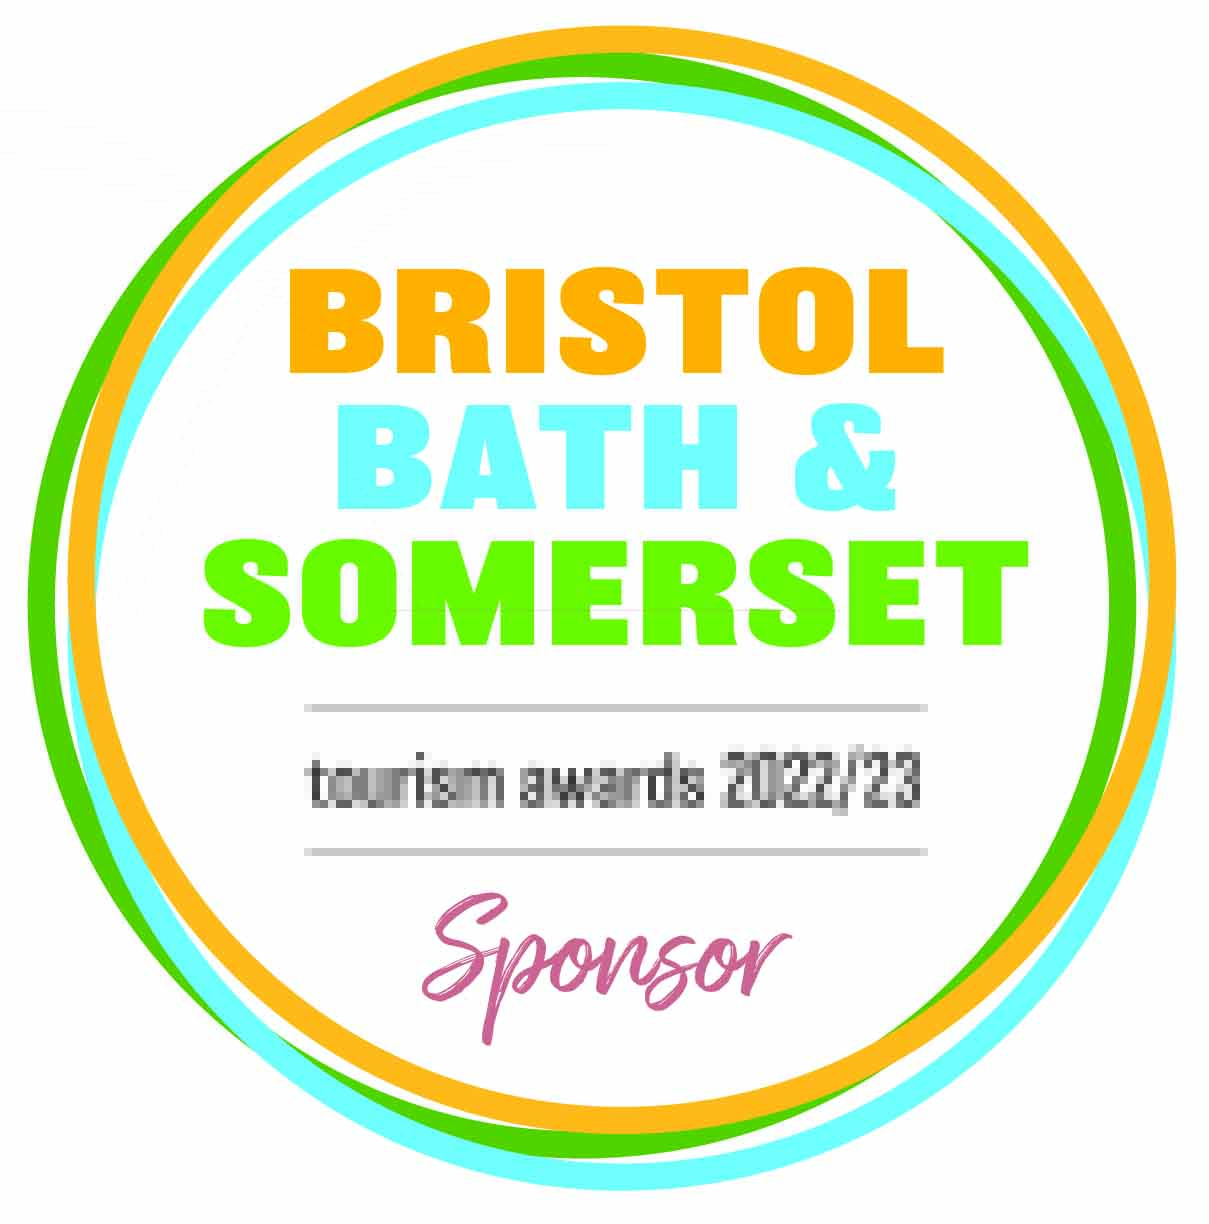 Bristol Bath Somerset SPONSOR